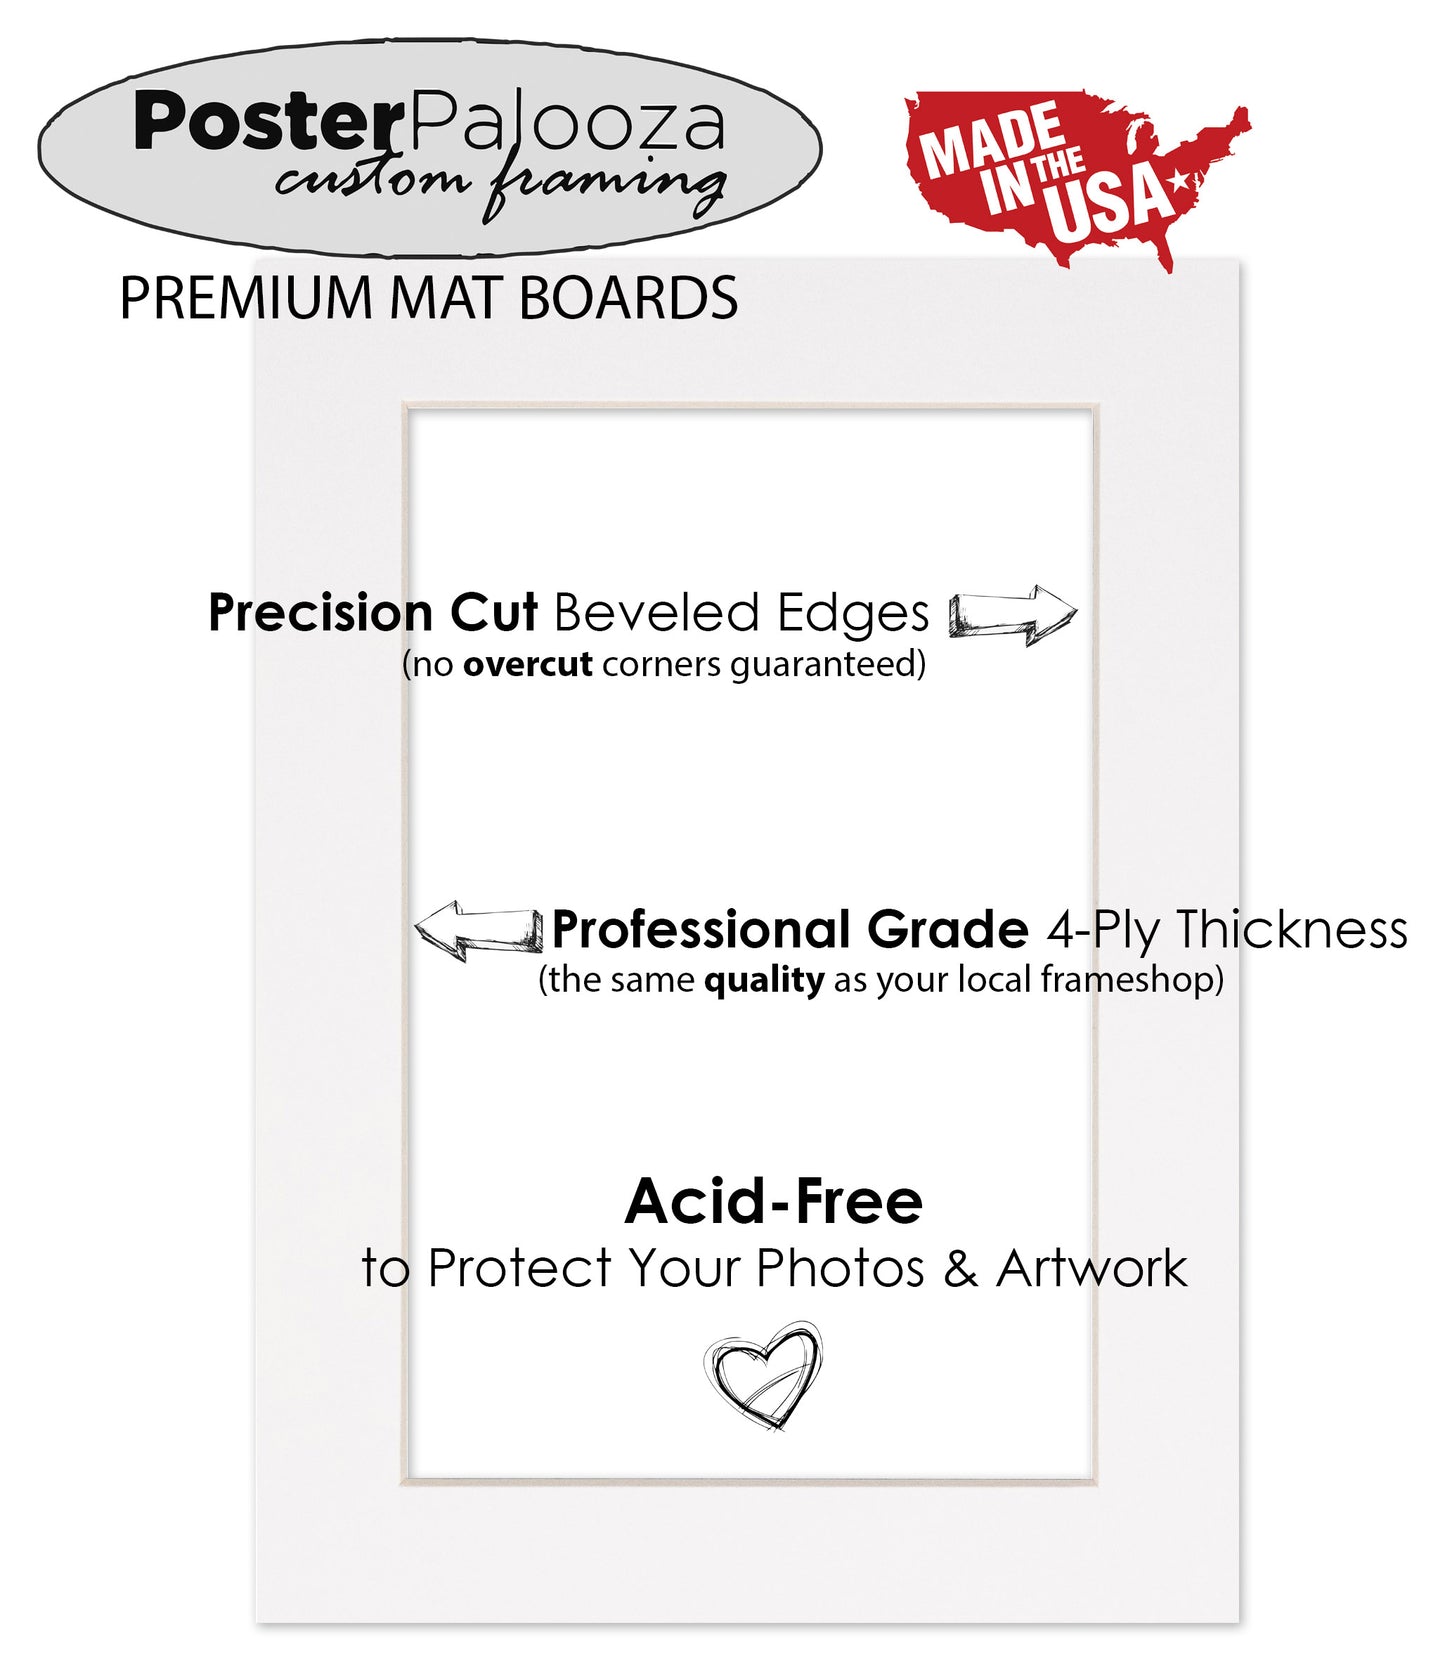 Pack of 10 Textured Black Precut Acid-Free Matboards